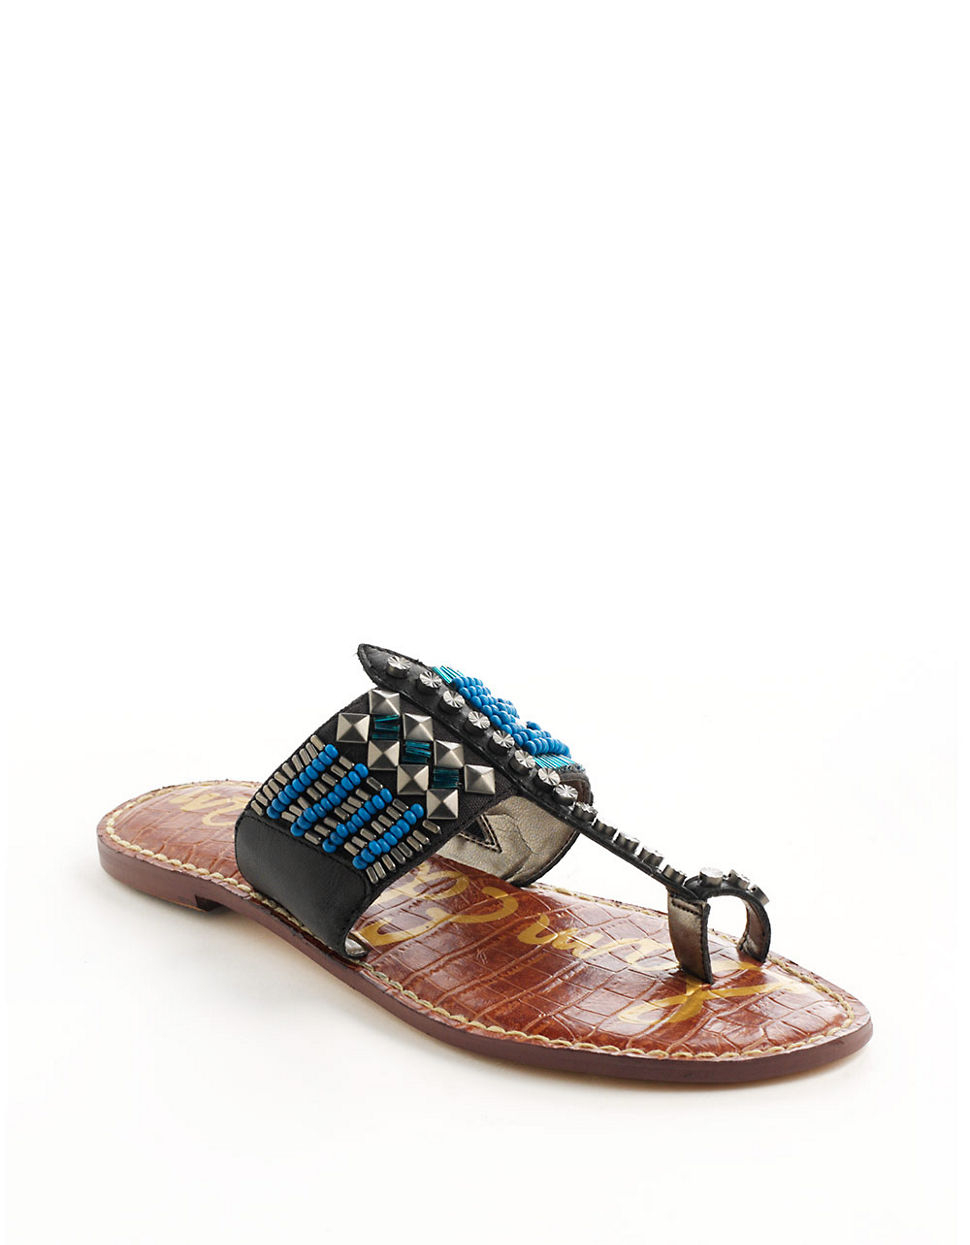 Sam Edelman Gideon Leather Beaded Sandals in Black (blackblue) | Lyst